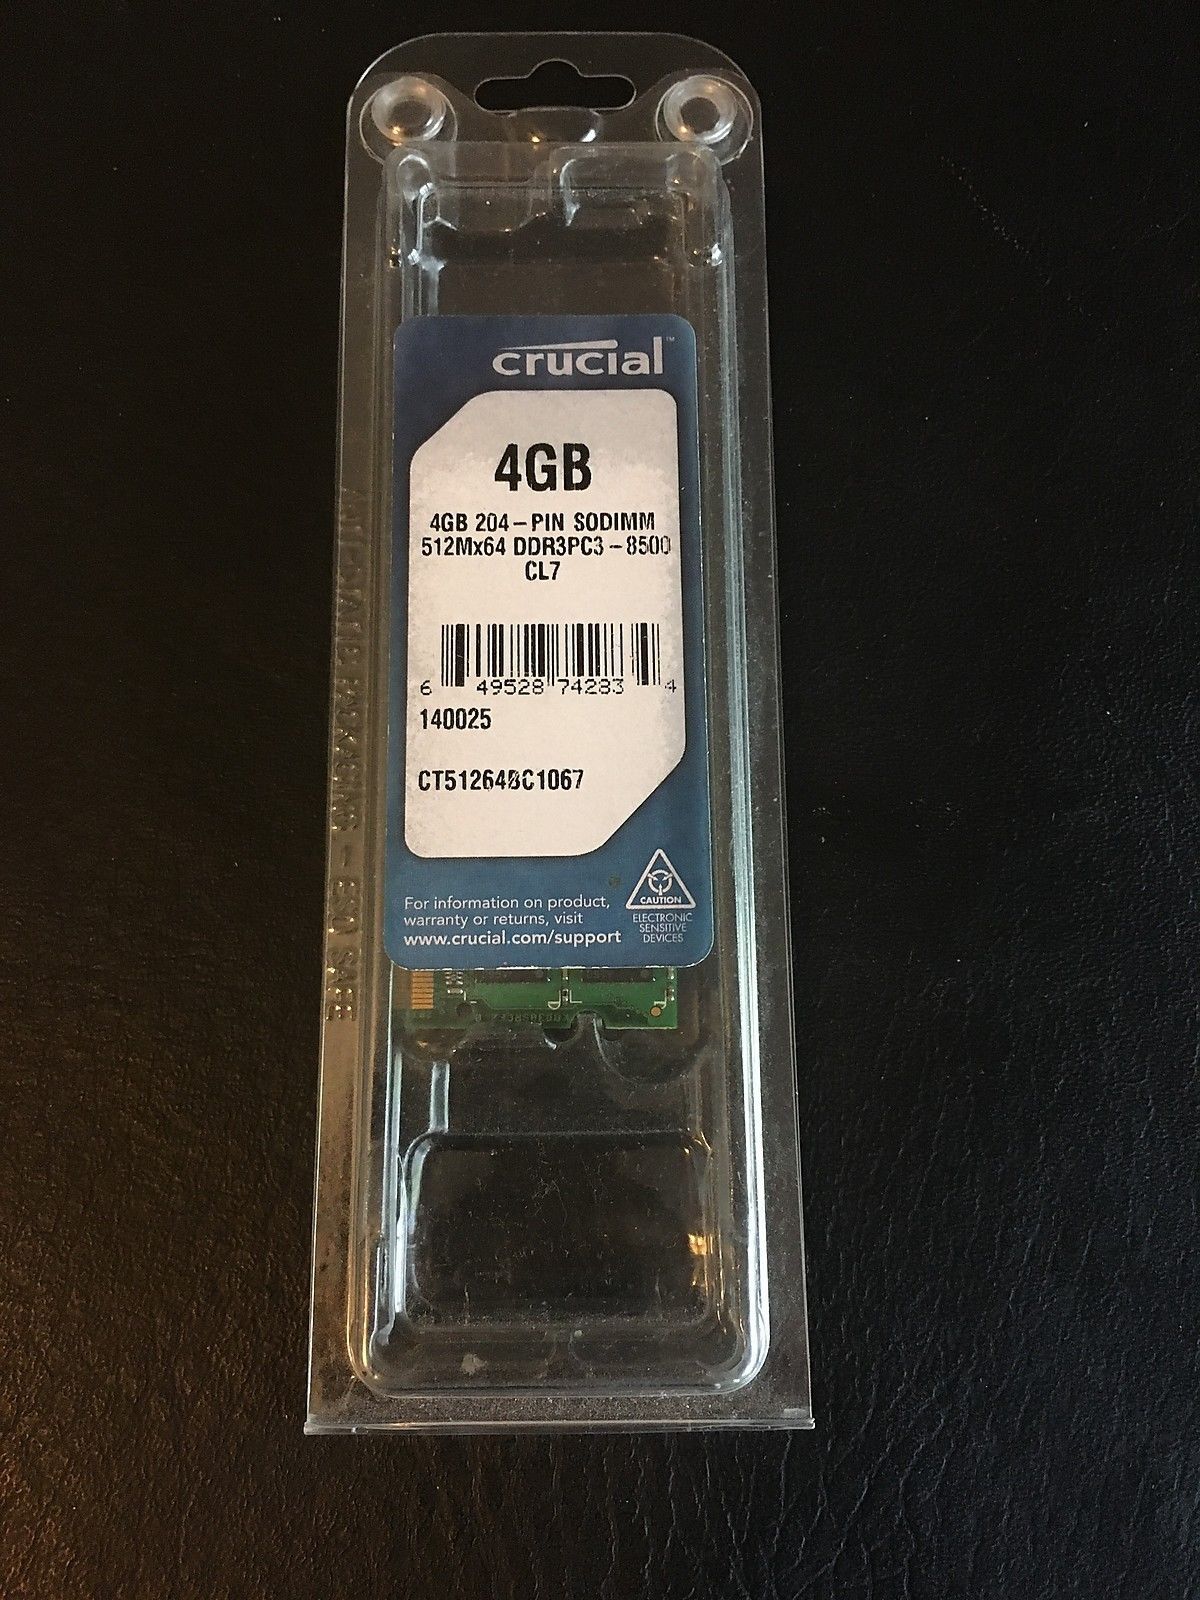 Crucial 4GB 204-Pin SODIMM 512MX64 DDR3PC3-8500 CL7 RAM Memory Module - $27.04